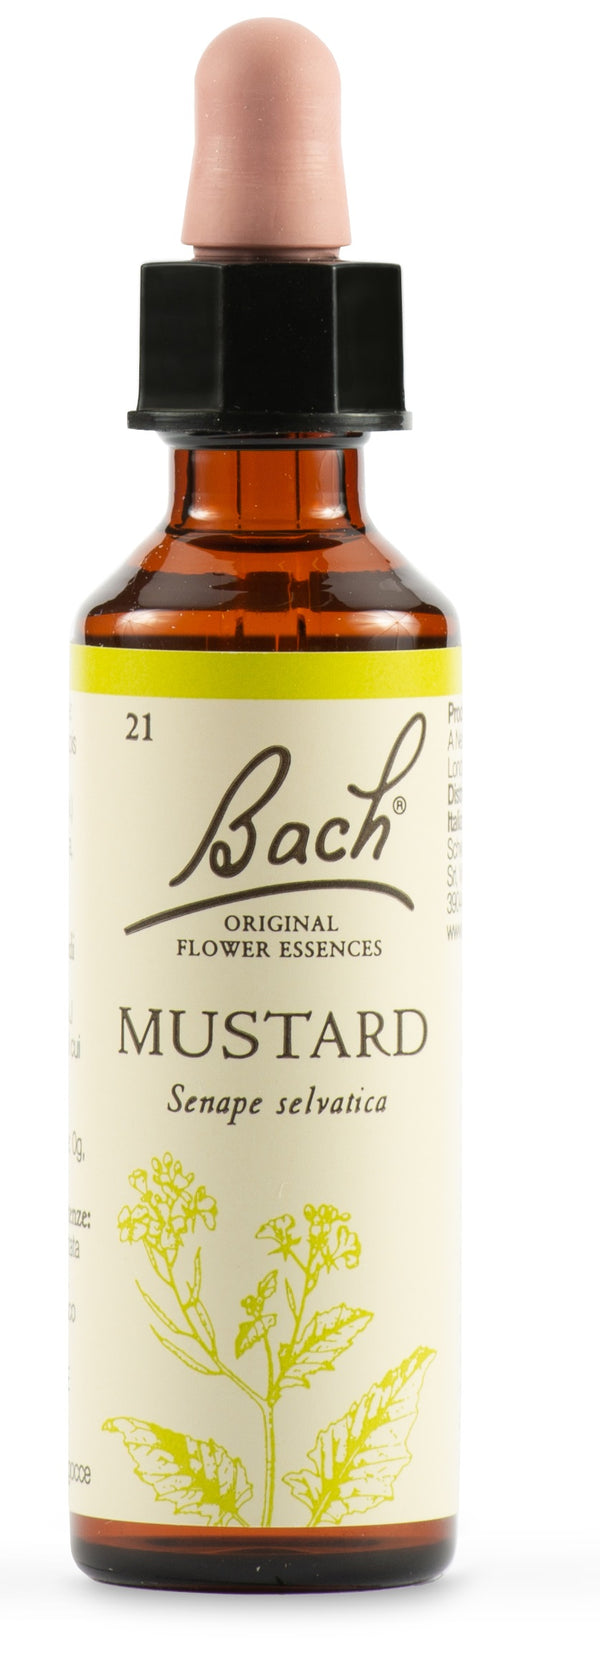 Mustard bach orig 20 ml